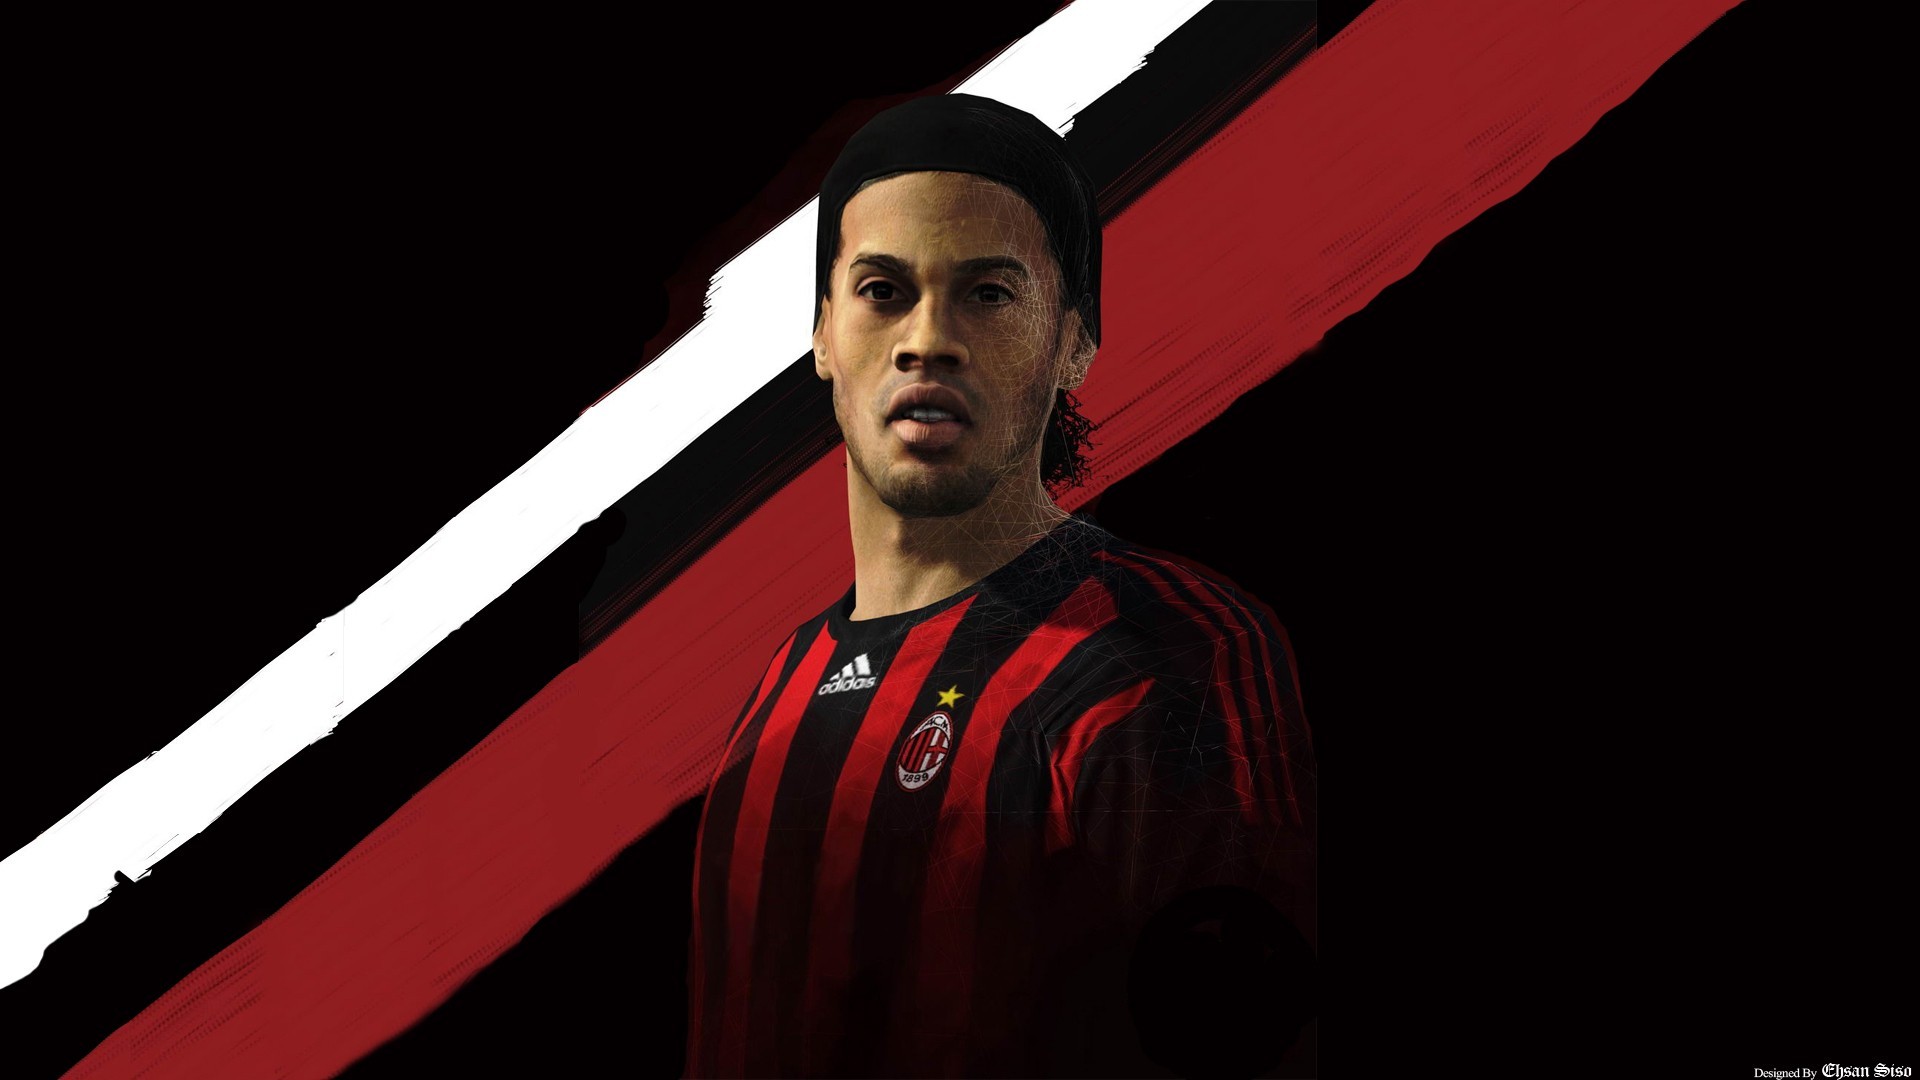 FIFA, Ronaldinho, AC Milan Wallpapers HD / Desktop and Mobile Backgrounds